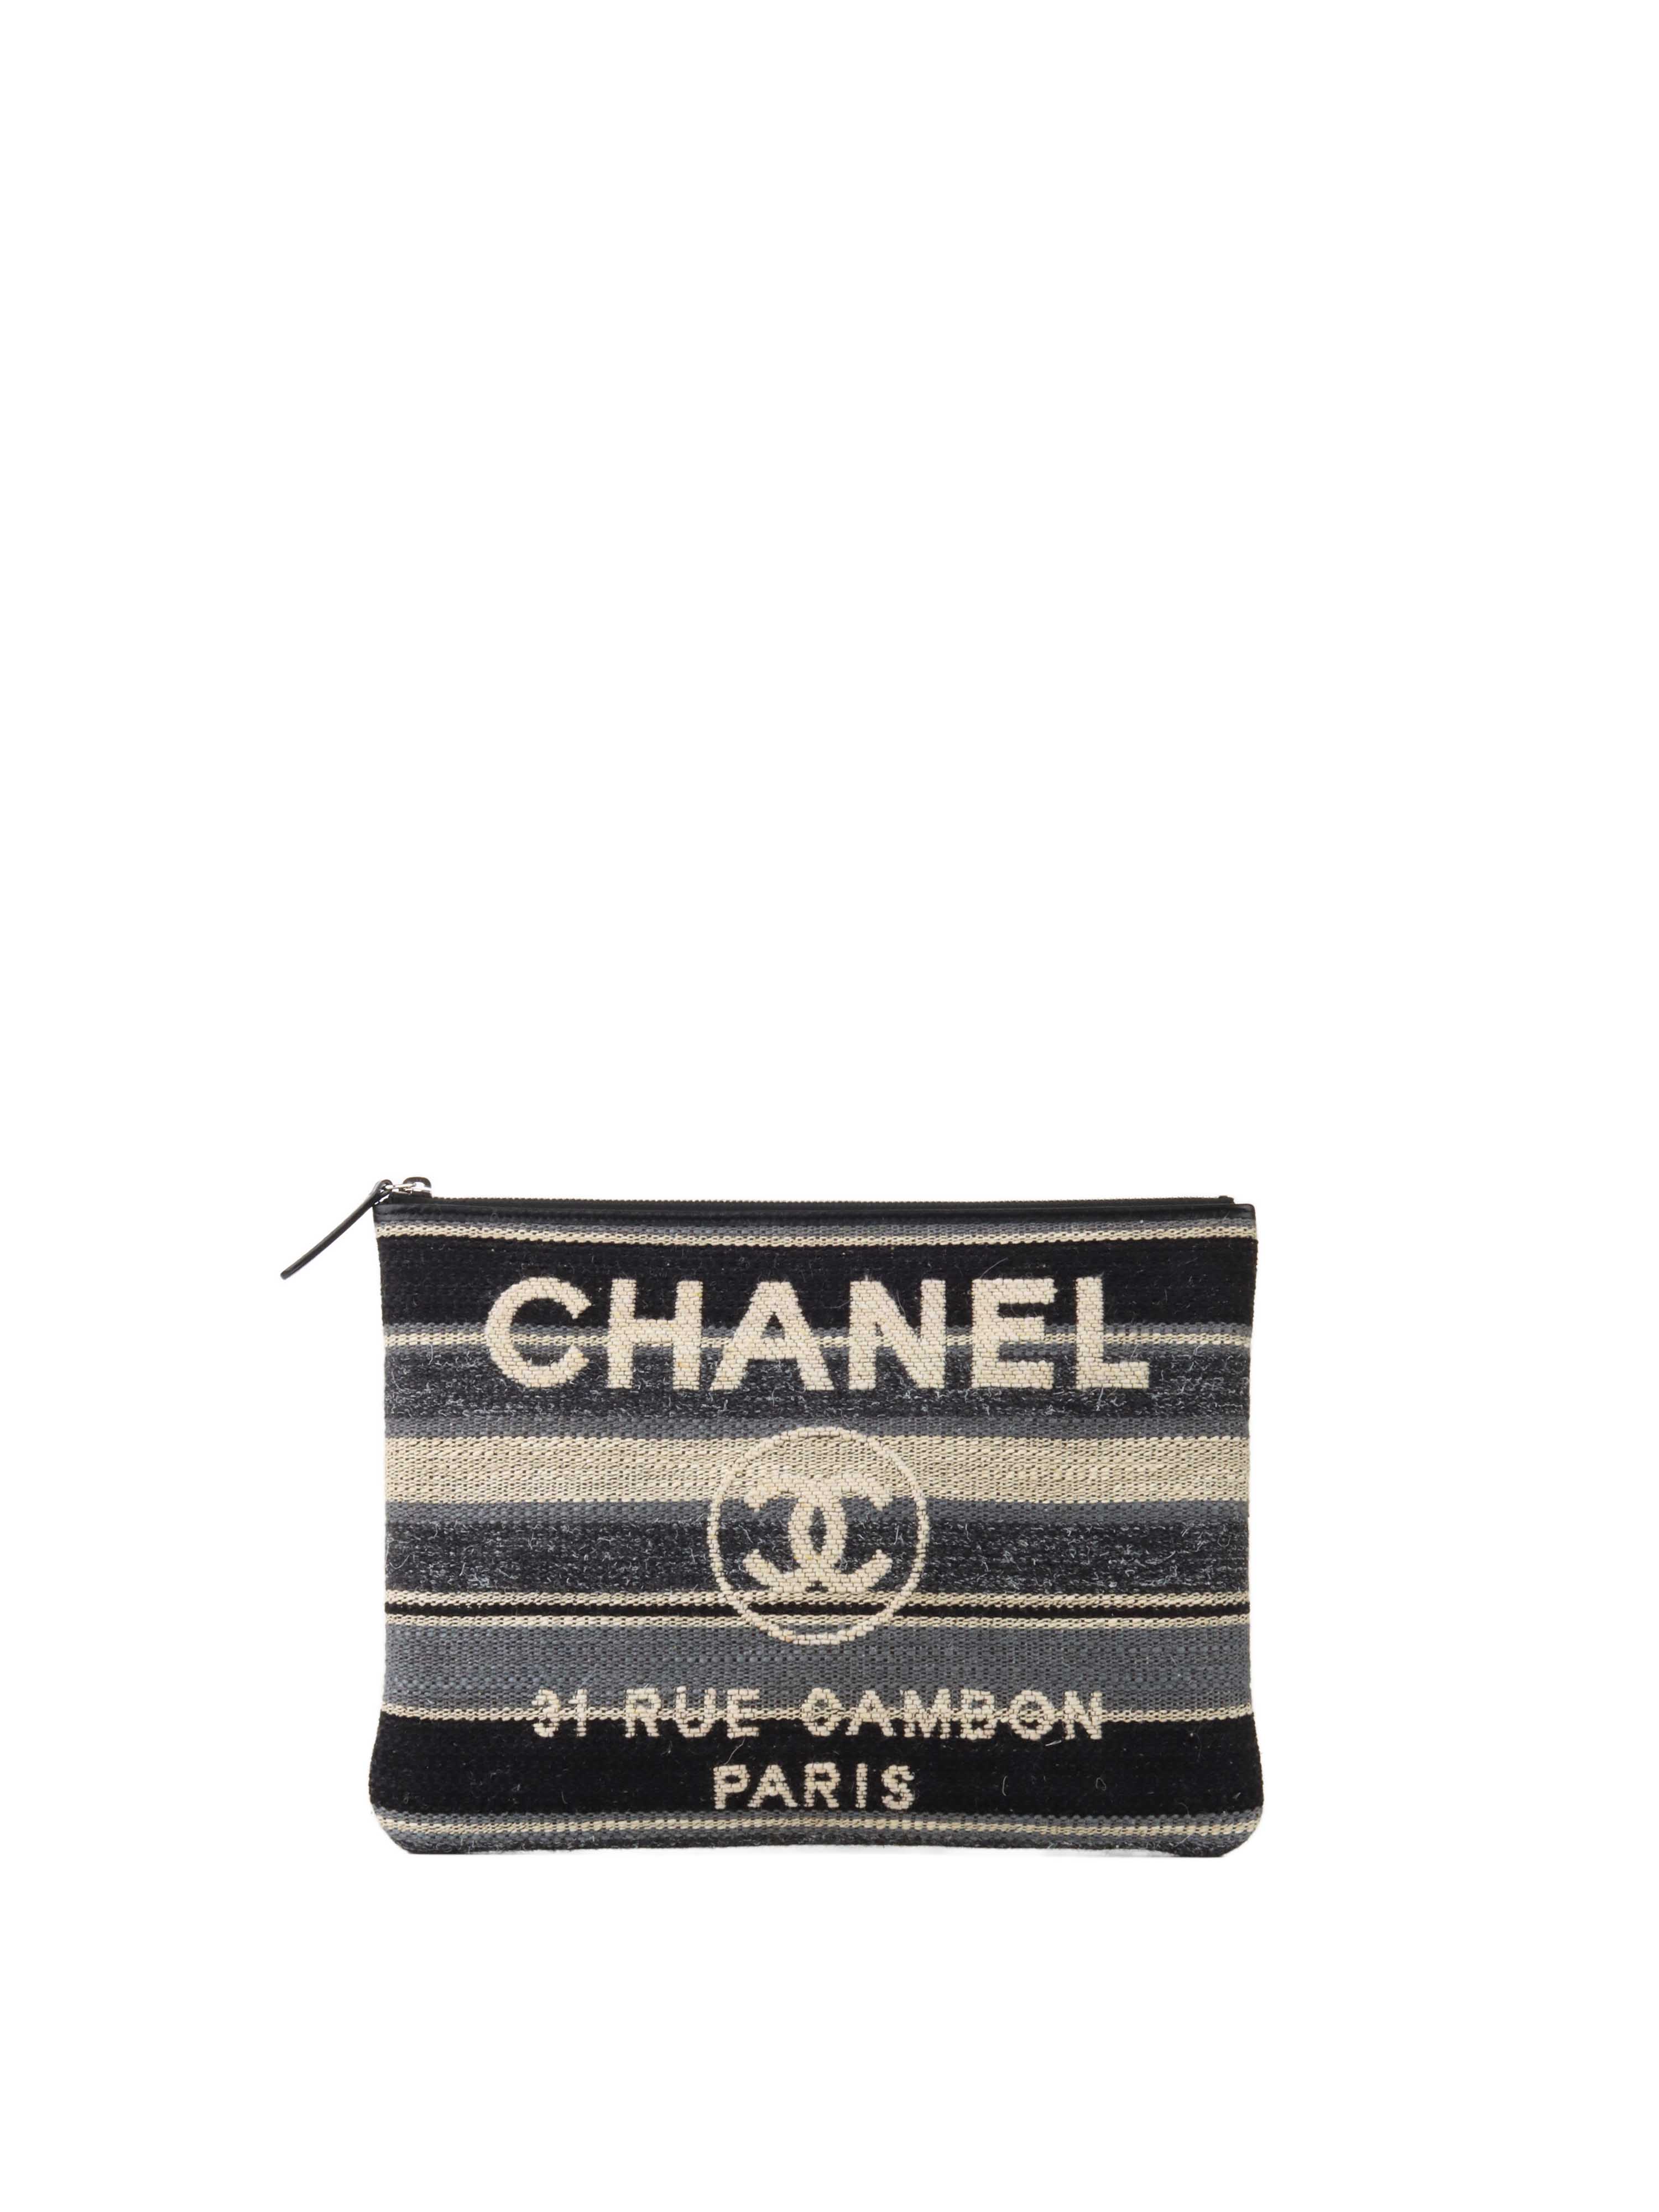 Chanel 31 Rue Cambon Zip Pouch.